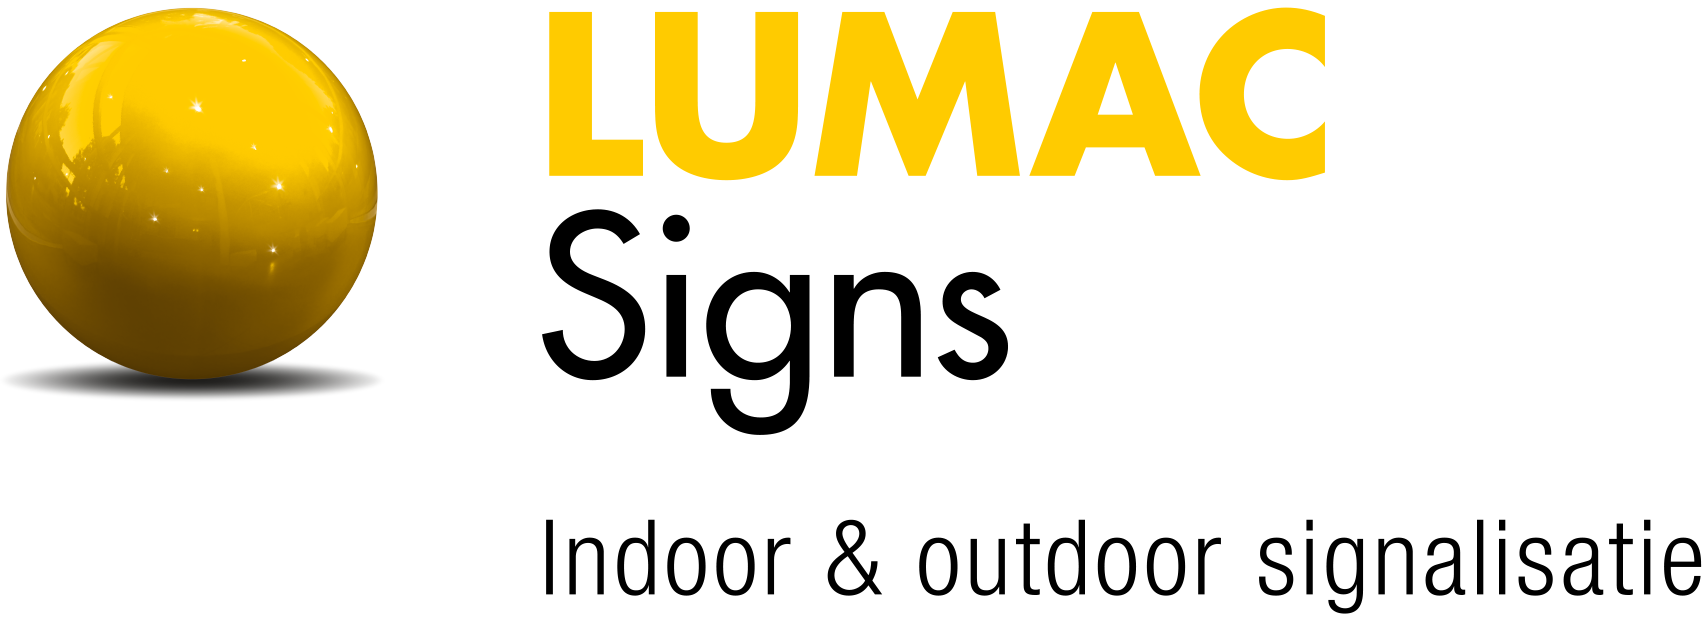 Lumac Signs - logo